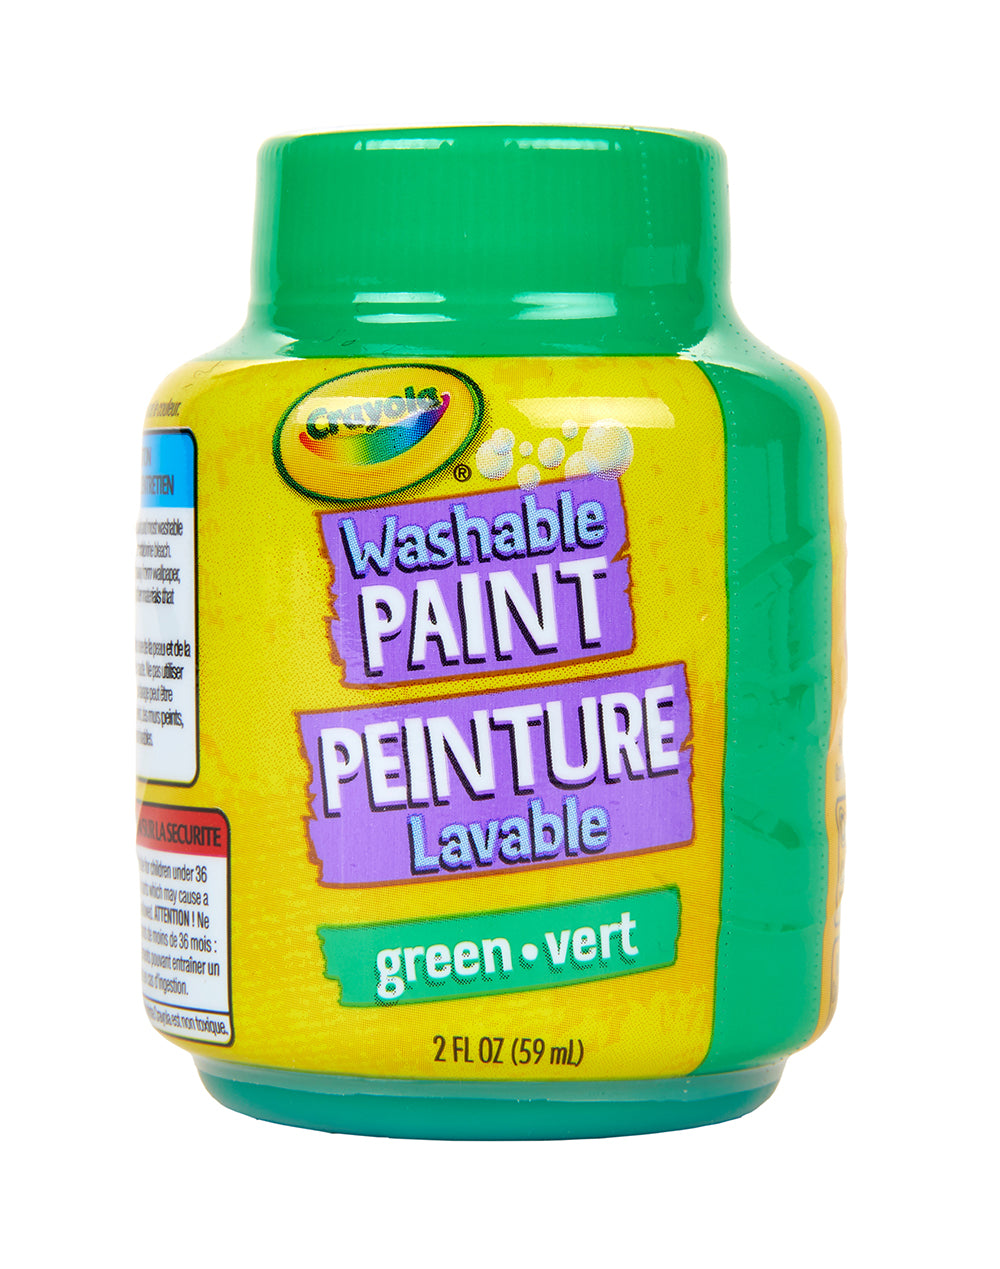 Peinture lavable - Vert